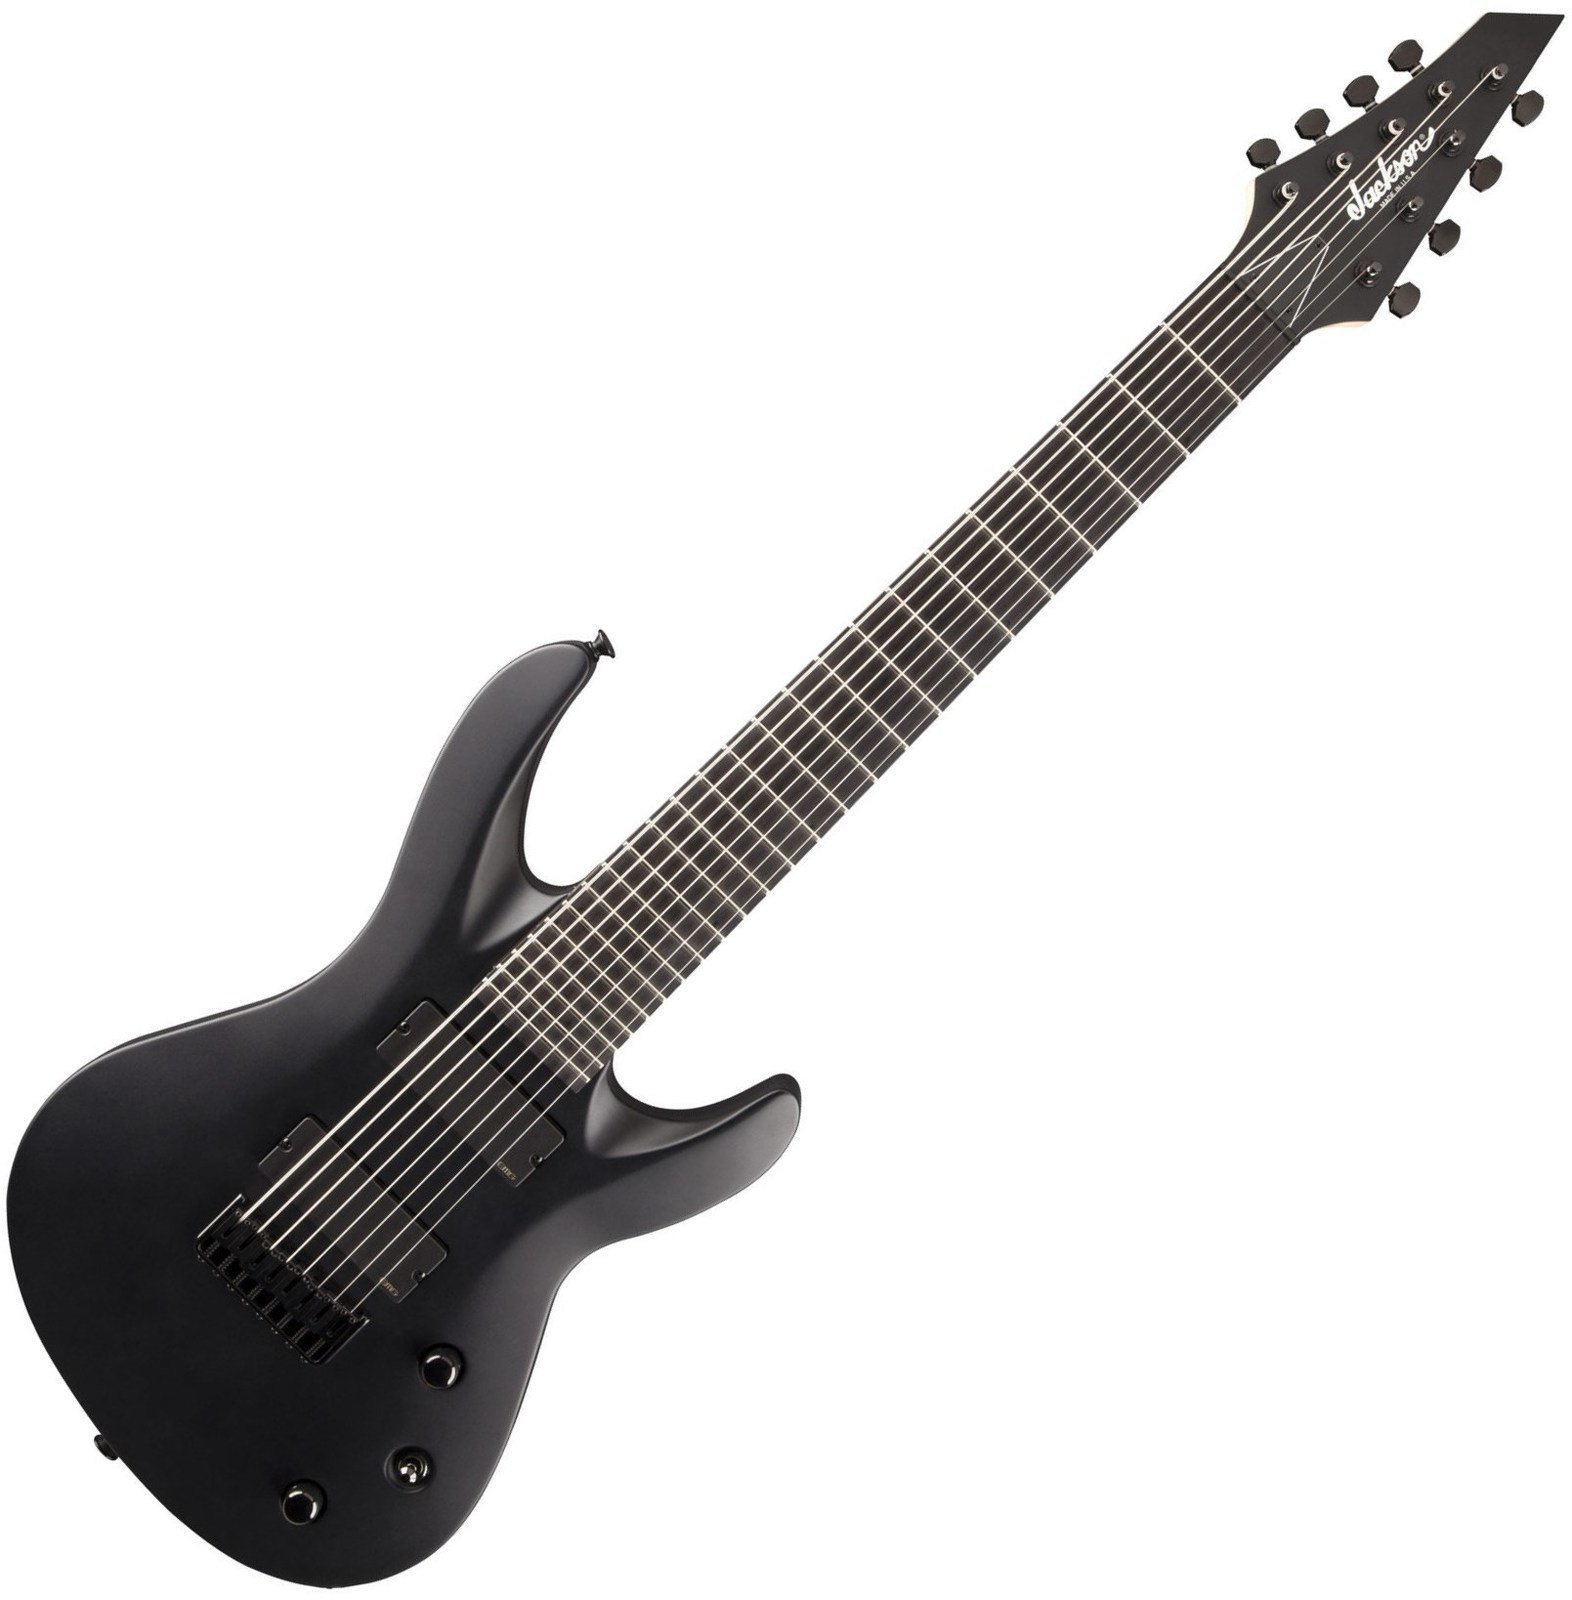 8-saitige E-Gitarre Jackson USA Select B8 Satin Black